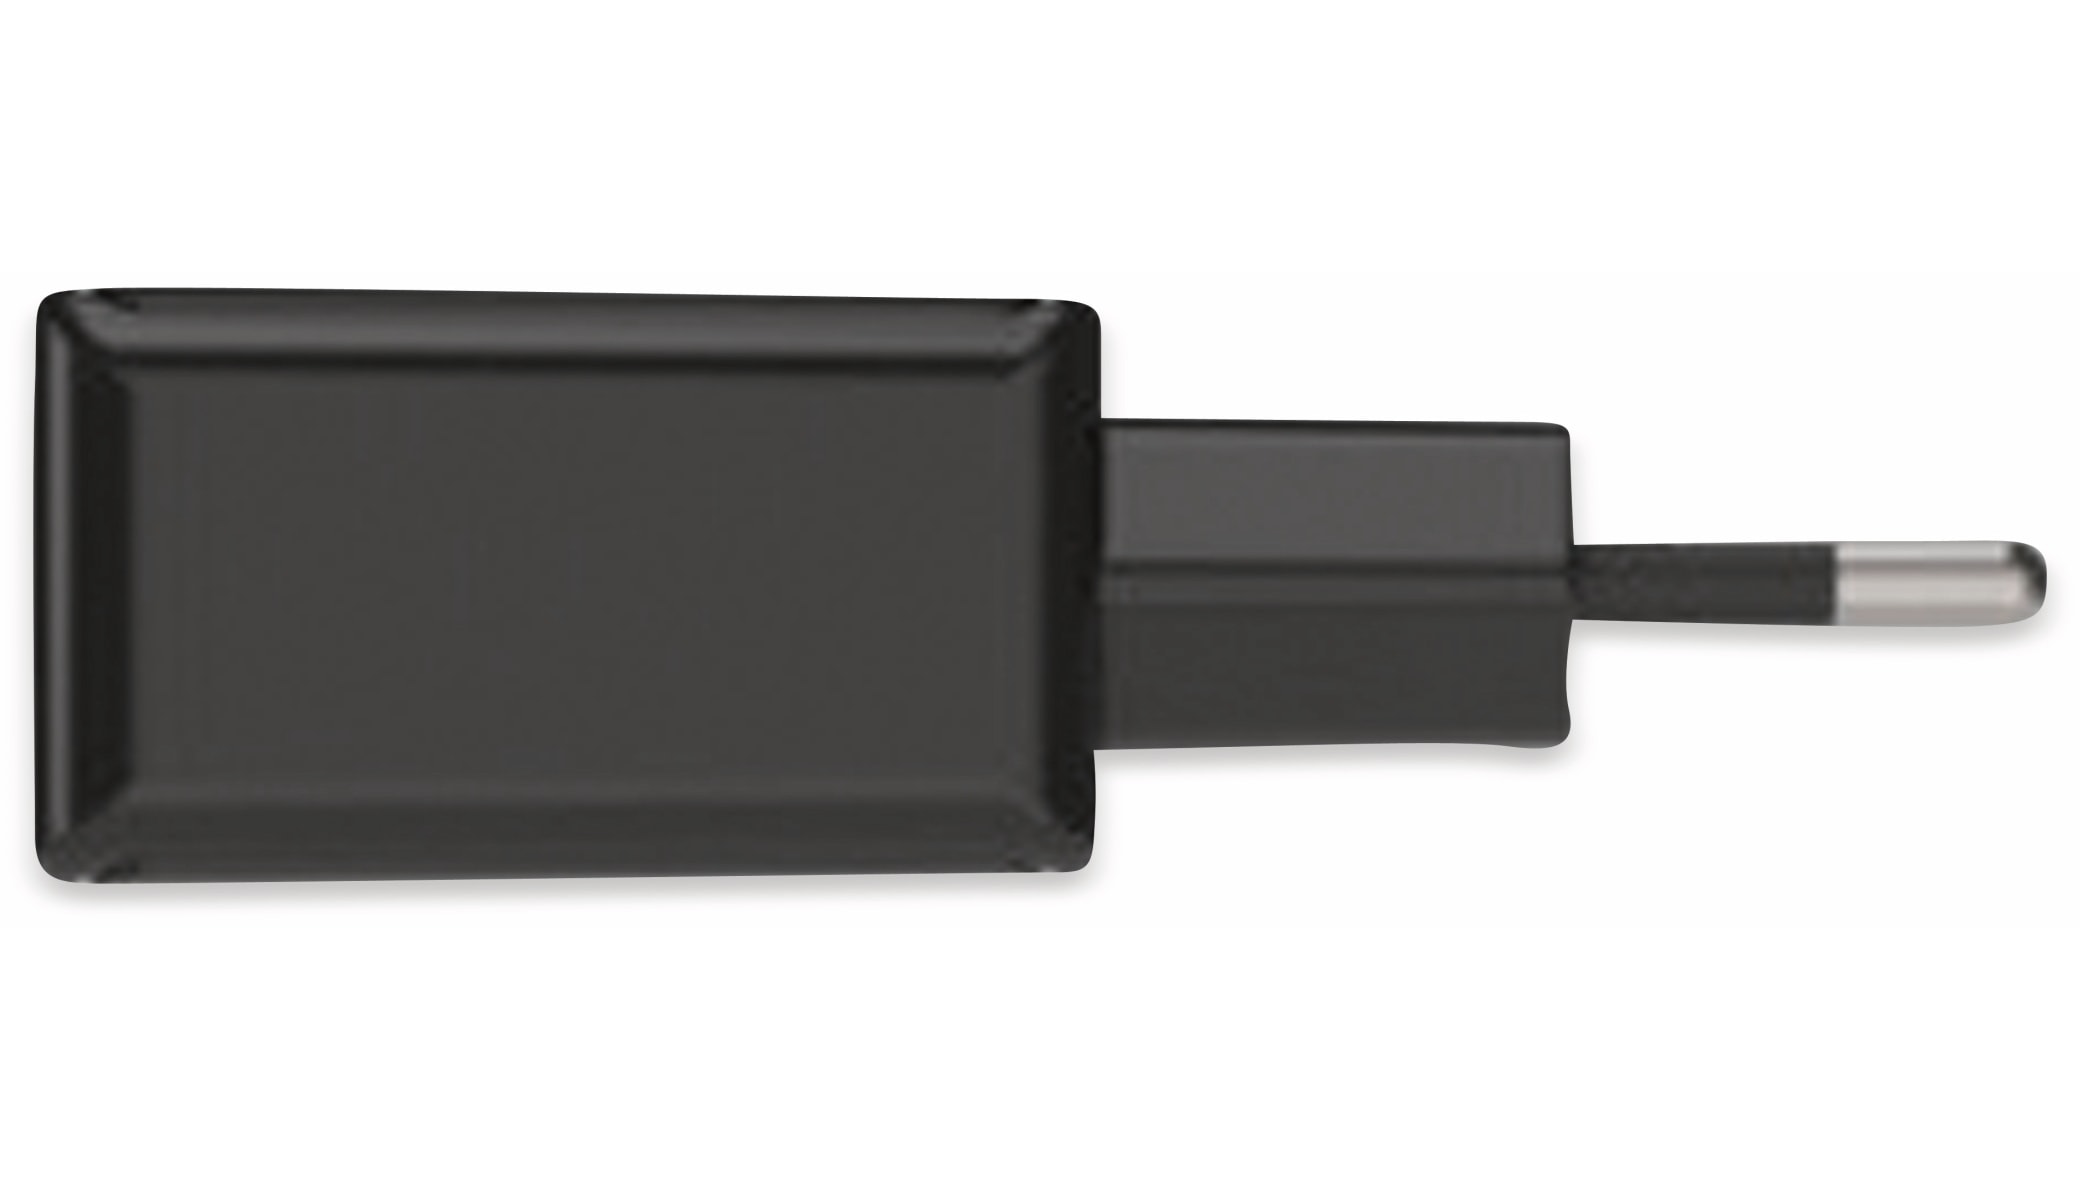 ANSMANN USB-Ladegerät HomeCharger HC218PD, 5 - 12V, 3000 mA, schwarz